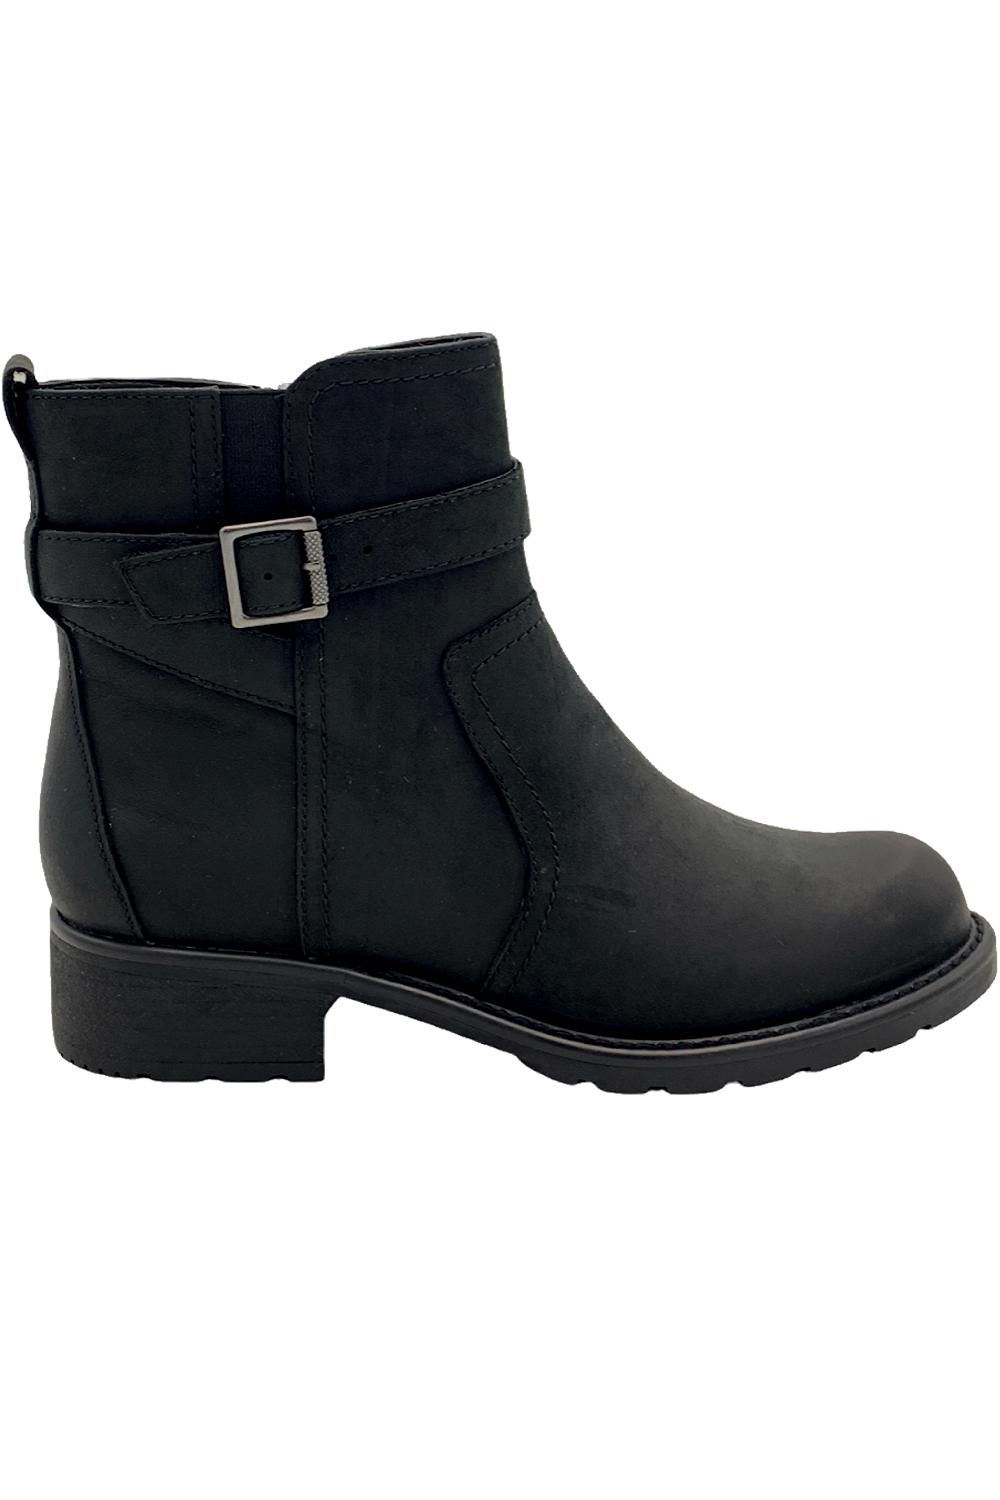 Admisión pasatiempo móvil Clarks Collection Leather Ankle Boots Orinoco Bend Black | Jender